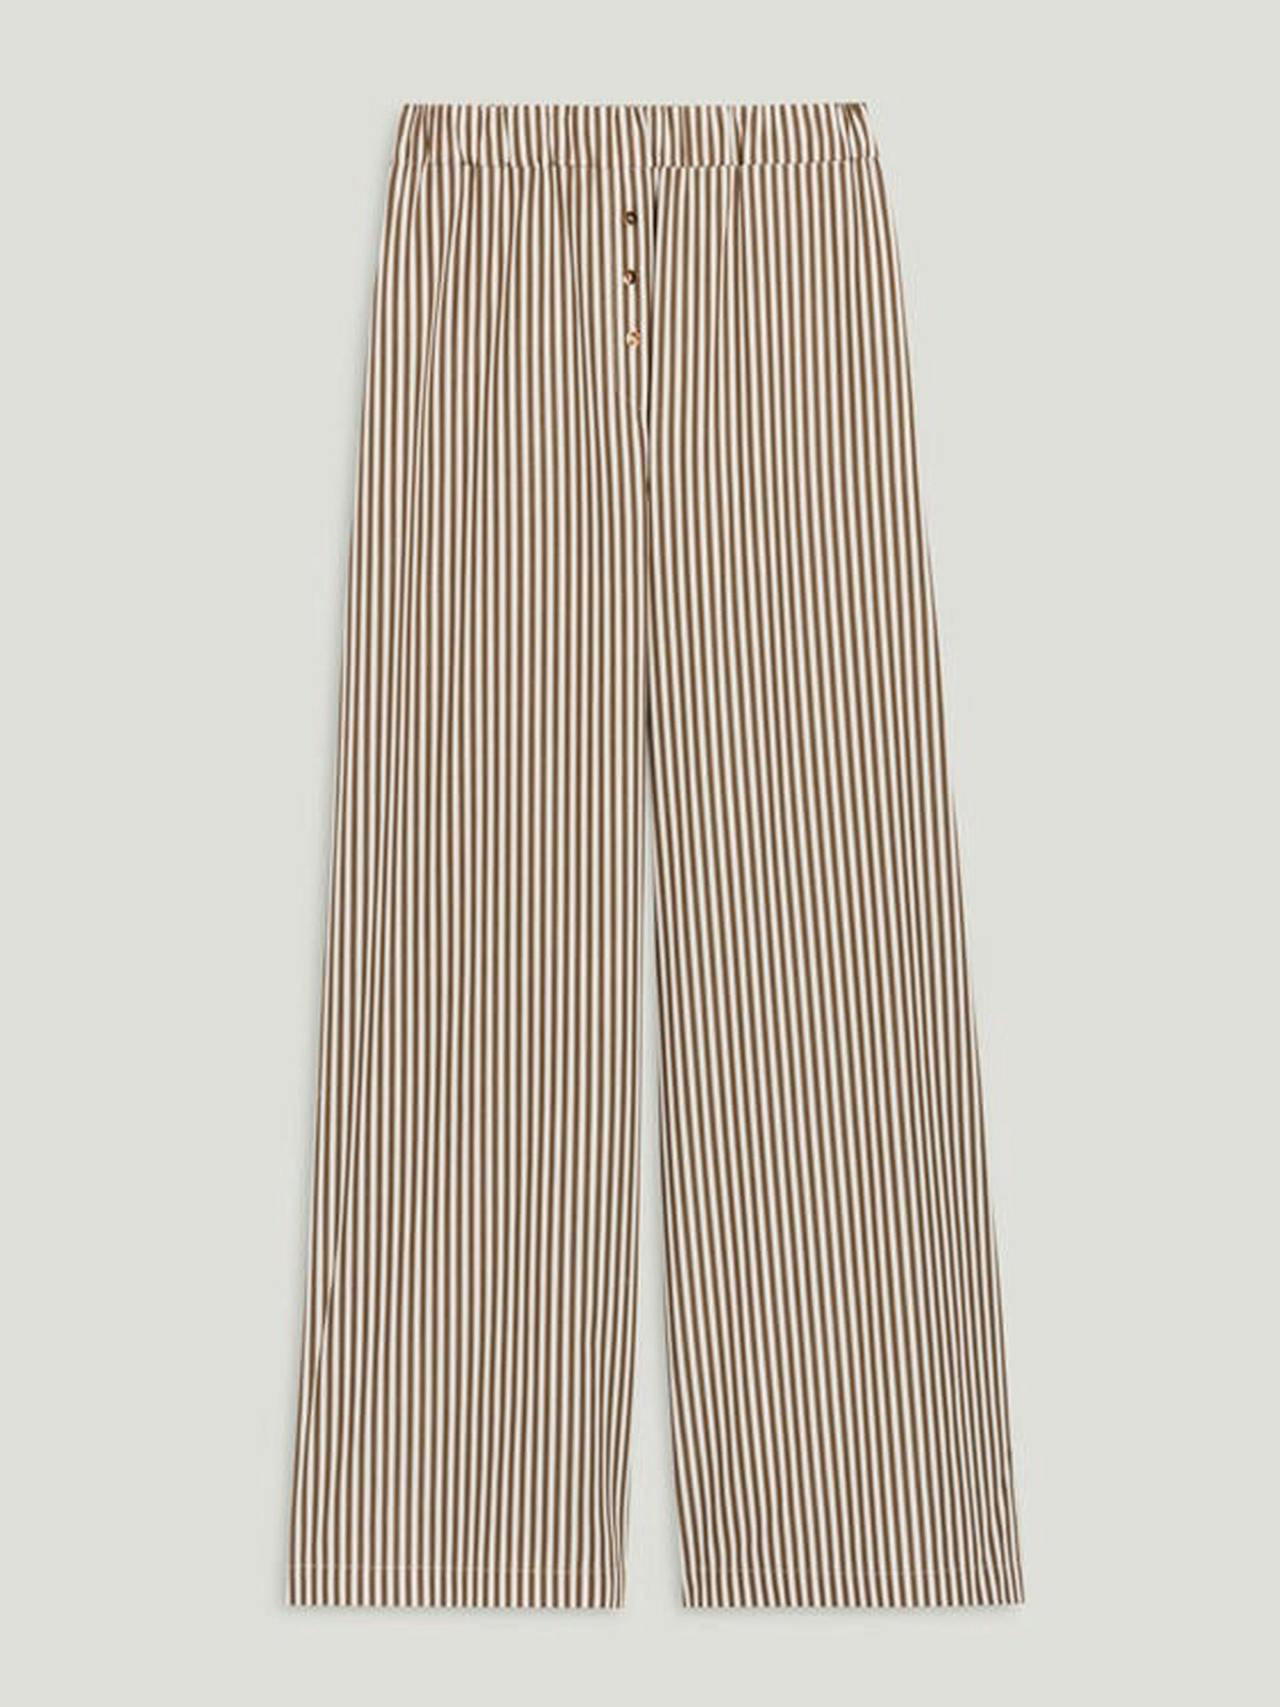 Bronze striped trousers